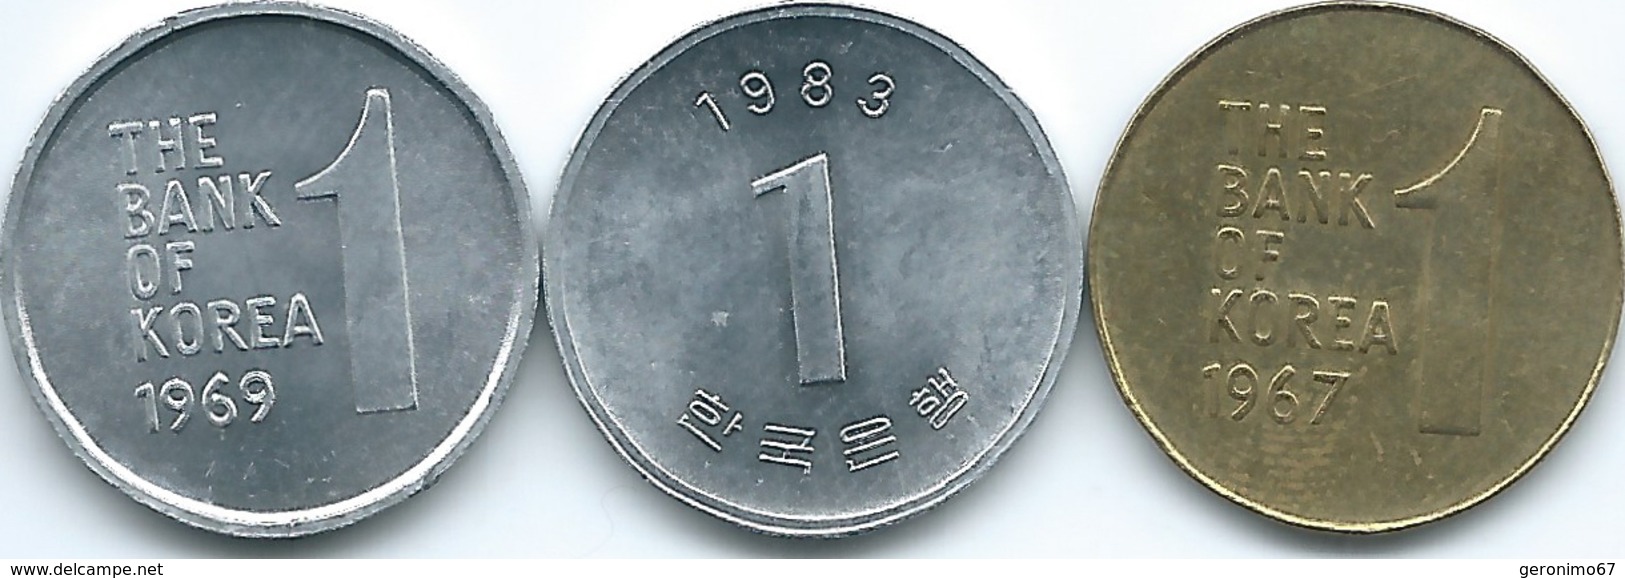 South Korea - 1 Won - 1967 (KM4) 1969 (KM4a) & 1983 (KM31) - Korea, South